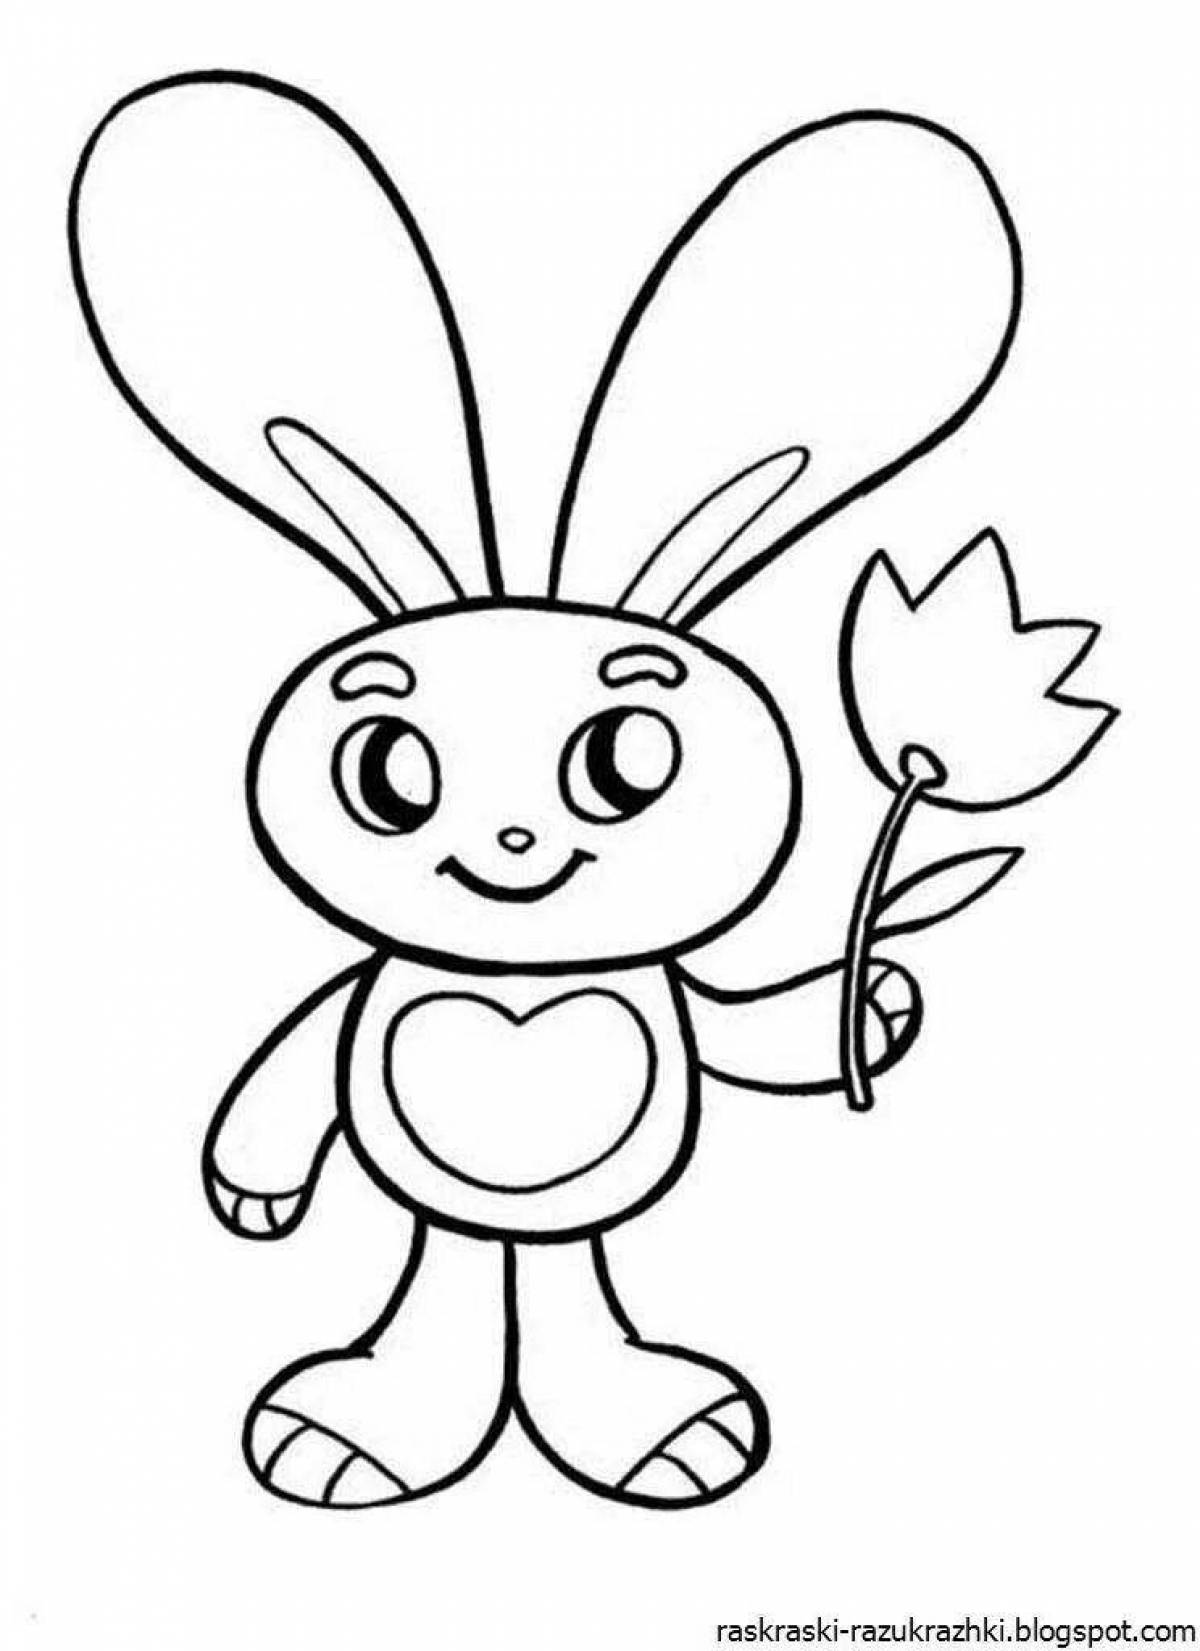 Nimble rabbit coloring book for children